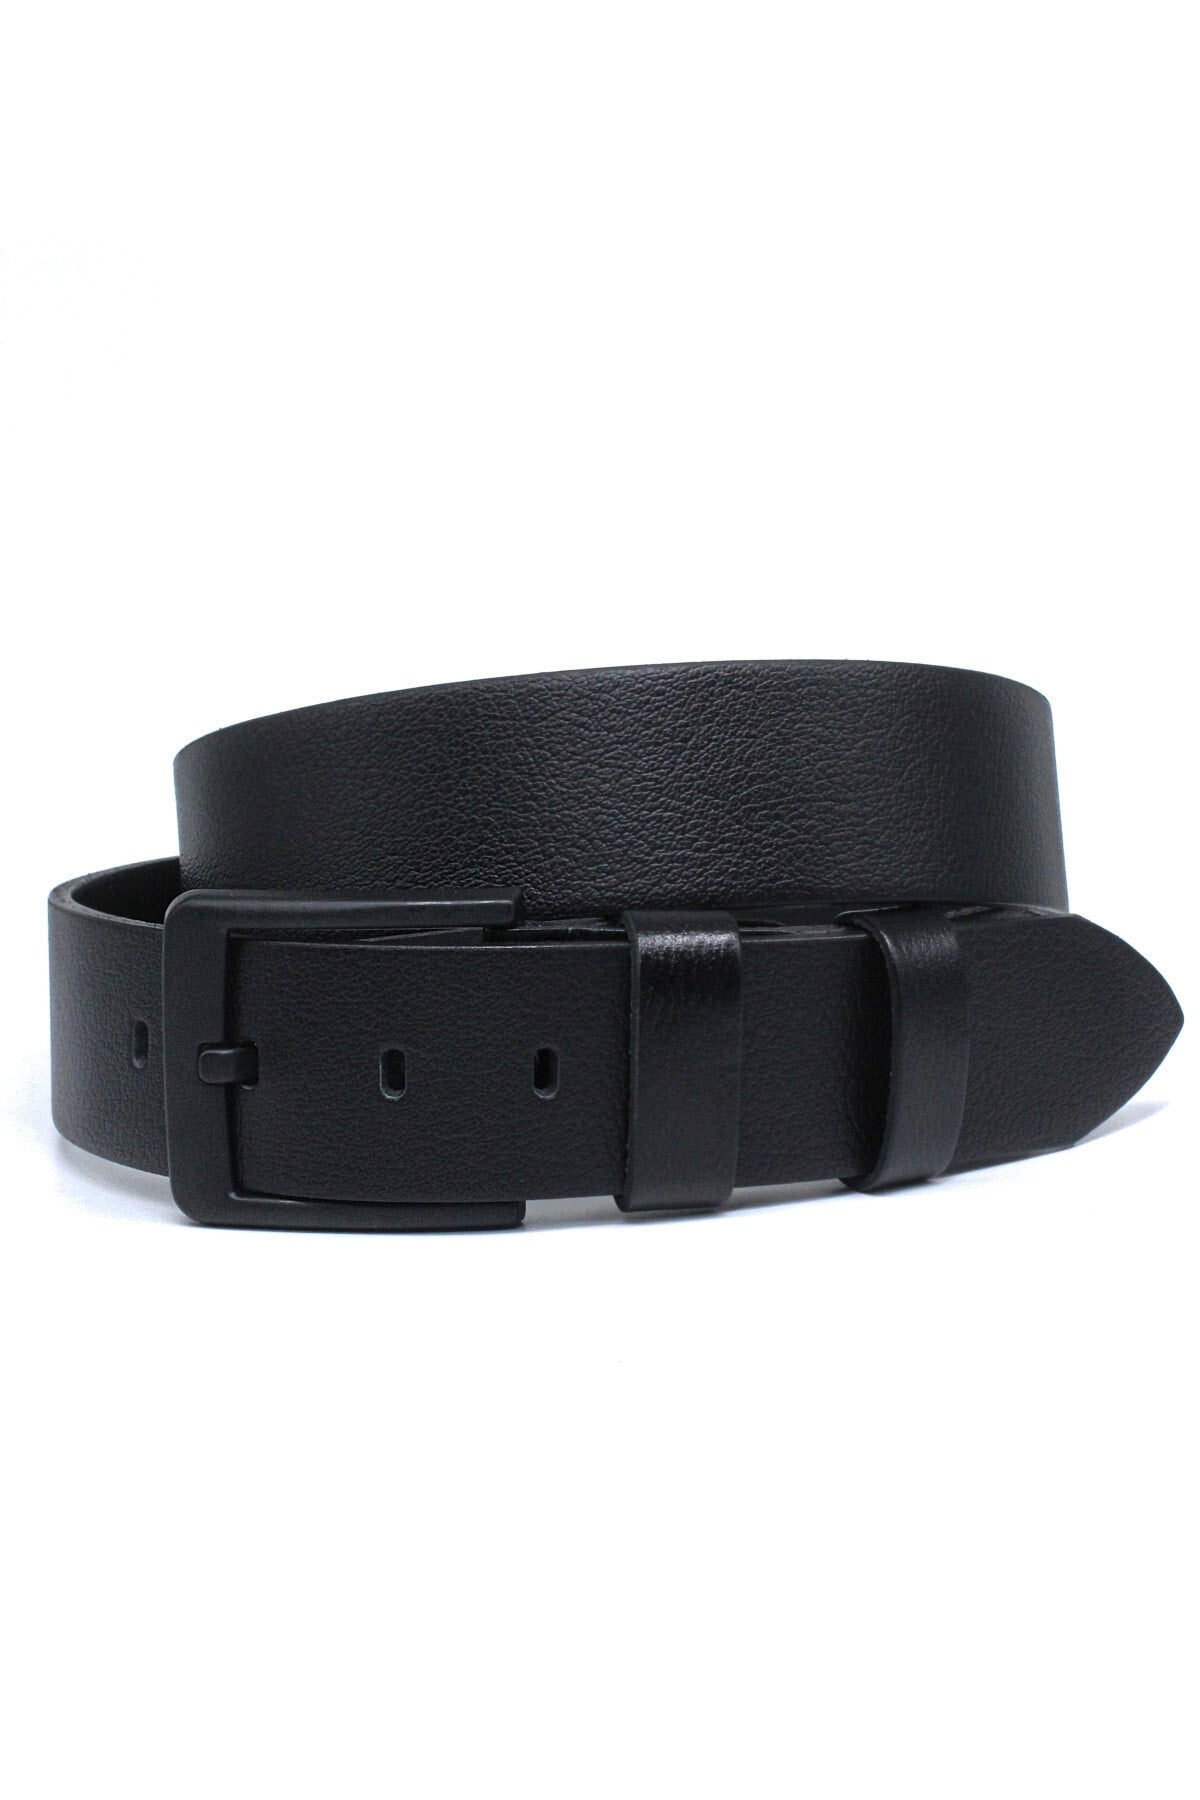 Pack Black - Black Buffalo Leather Men's Denim Belt 4.5 Cm